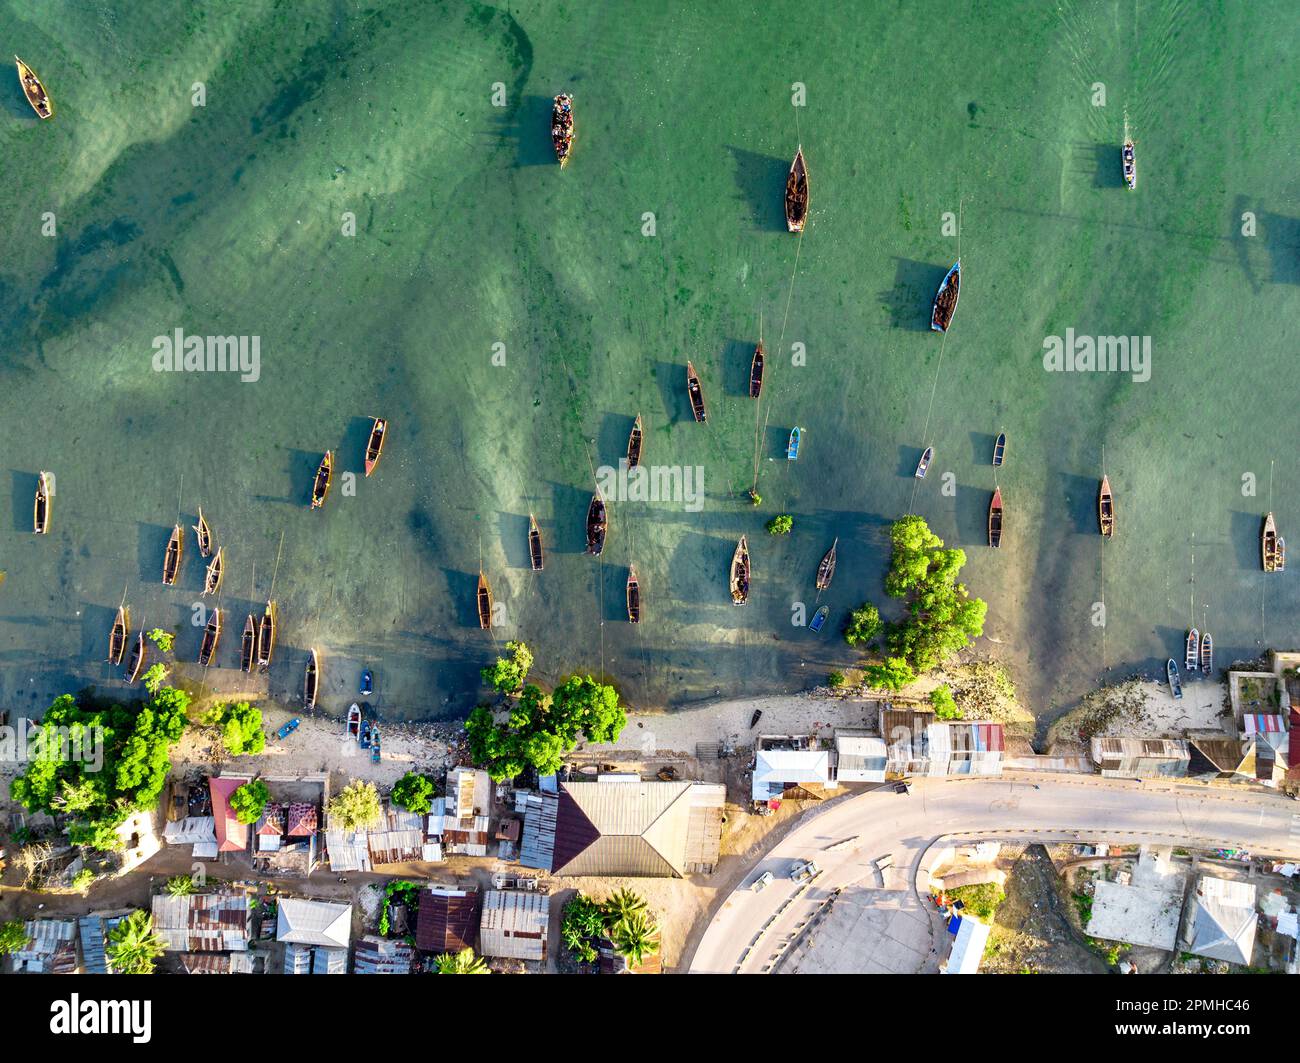 Luftaufnahme von Booten in der exotischen Lagune, Mkokotoni, Sansibar, Tansania, Ostafrika, Afrika Stockfoto